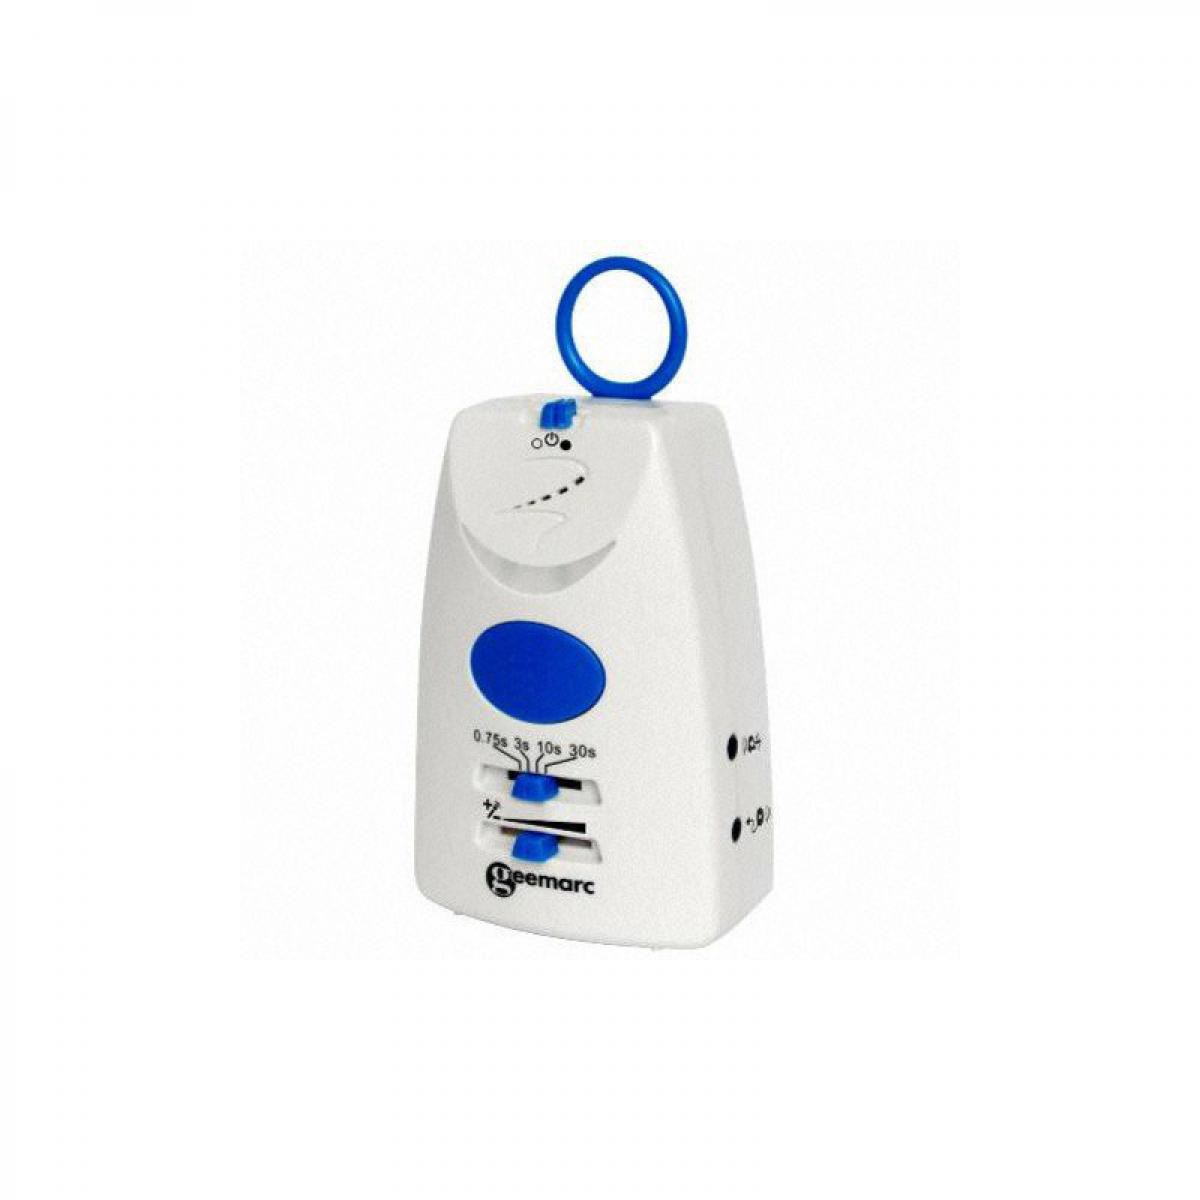 Geemarc - AMPLICALL 30 - Surveillance bébé - Babyphone connecté